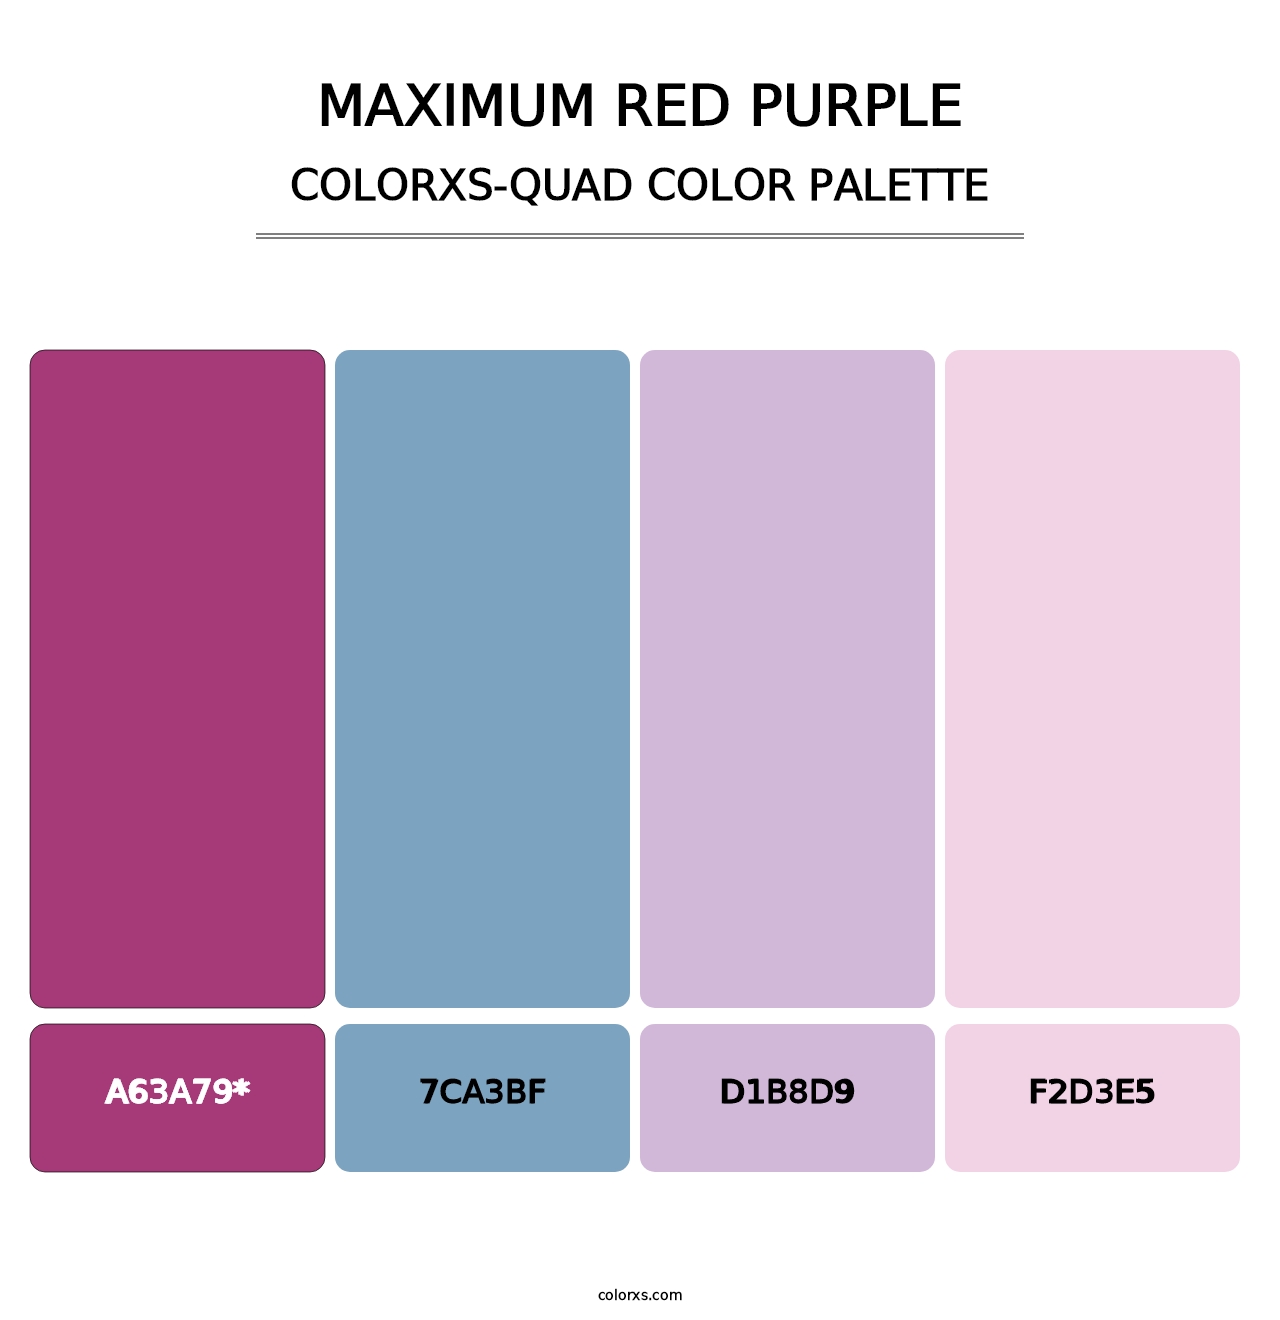 Maximum Red Purple - Colorxs Quad Palette